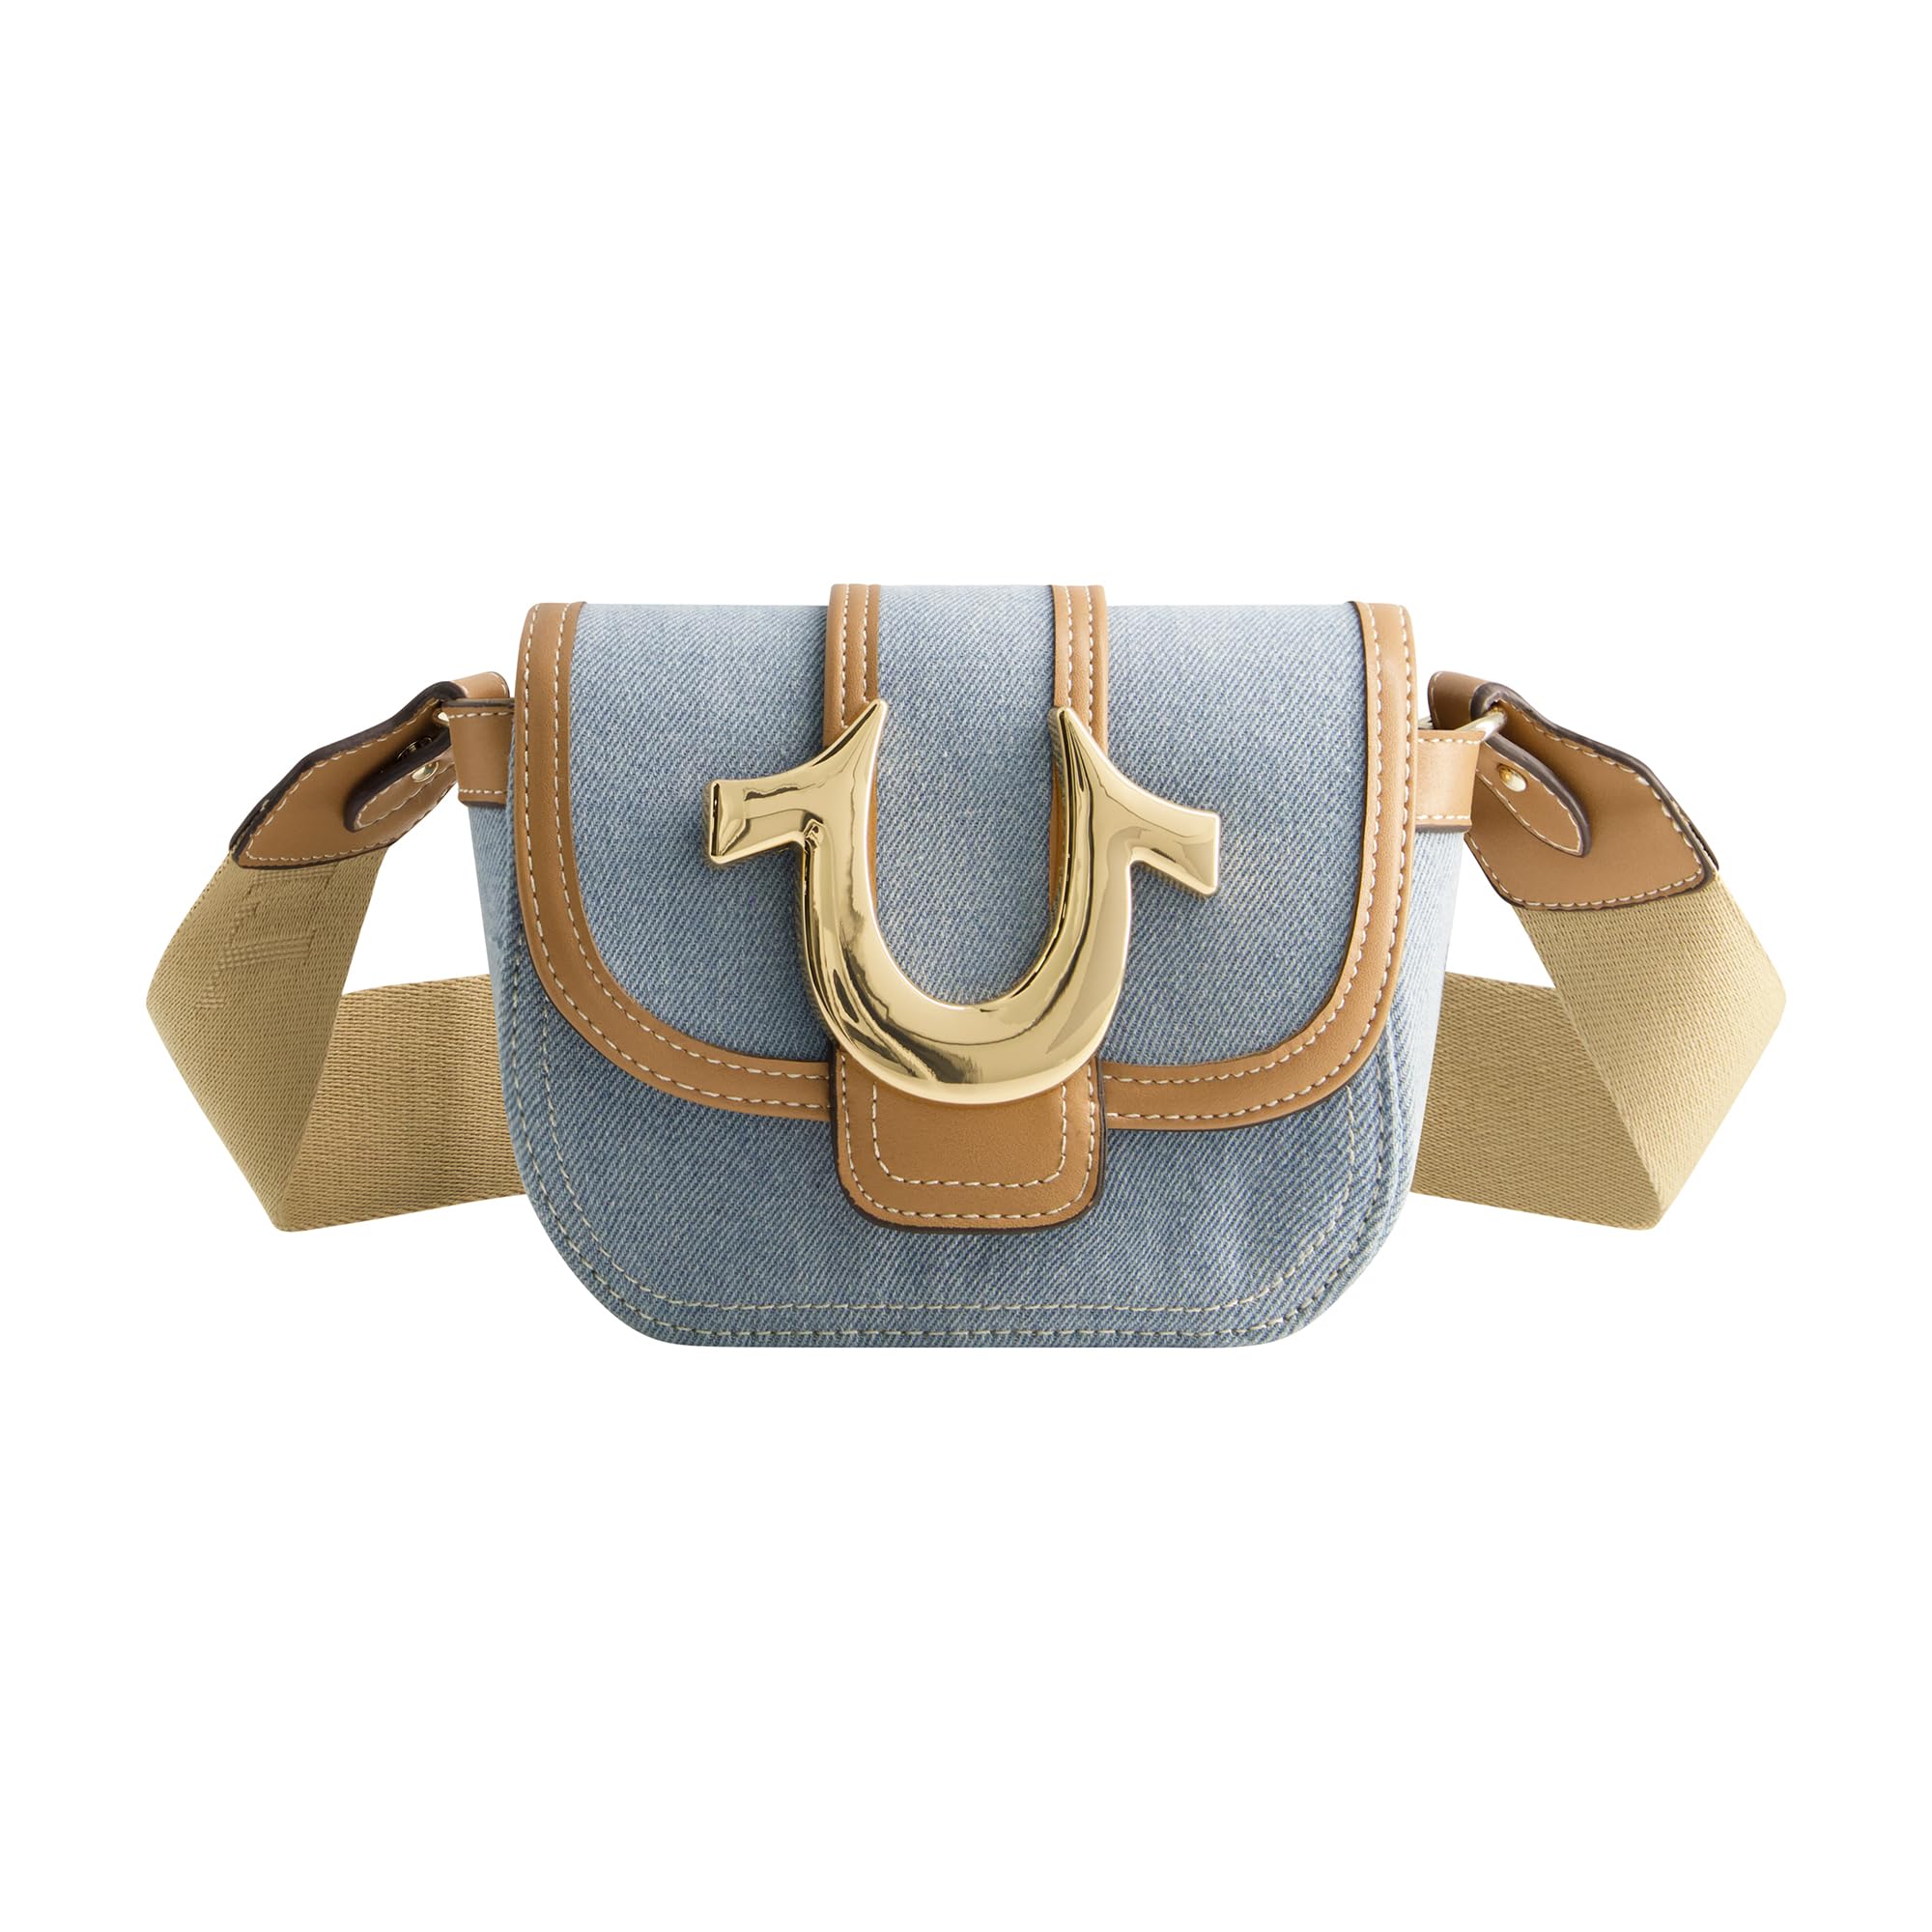 True Religion Women's Crossbody Bag, Denim Mini Flap Adjustable Shoulder Handbag with Horseshoe Logo, Light Blue